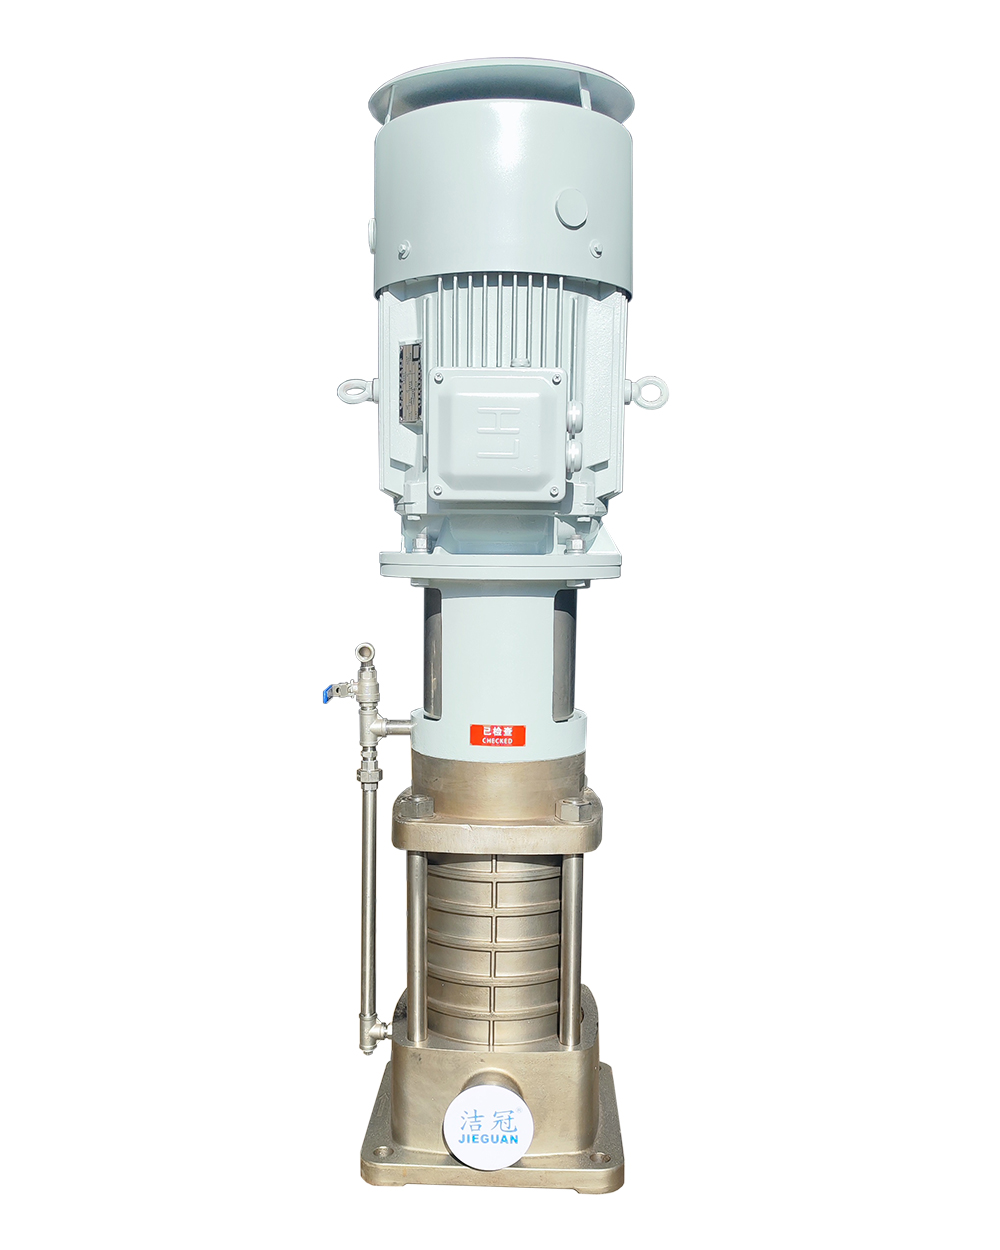 JIEGUAN DL-G13 series marine vertical multistage centrifugal pump